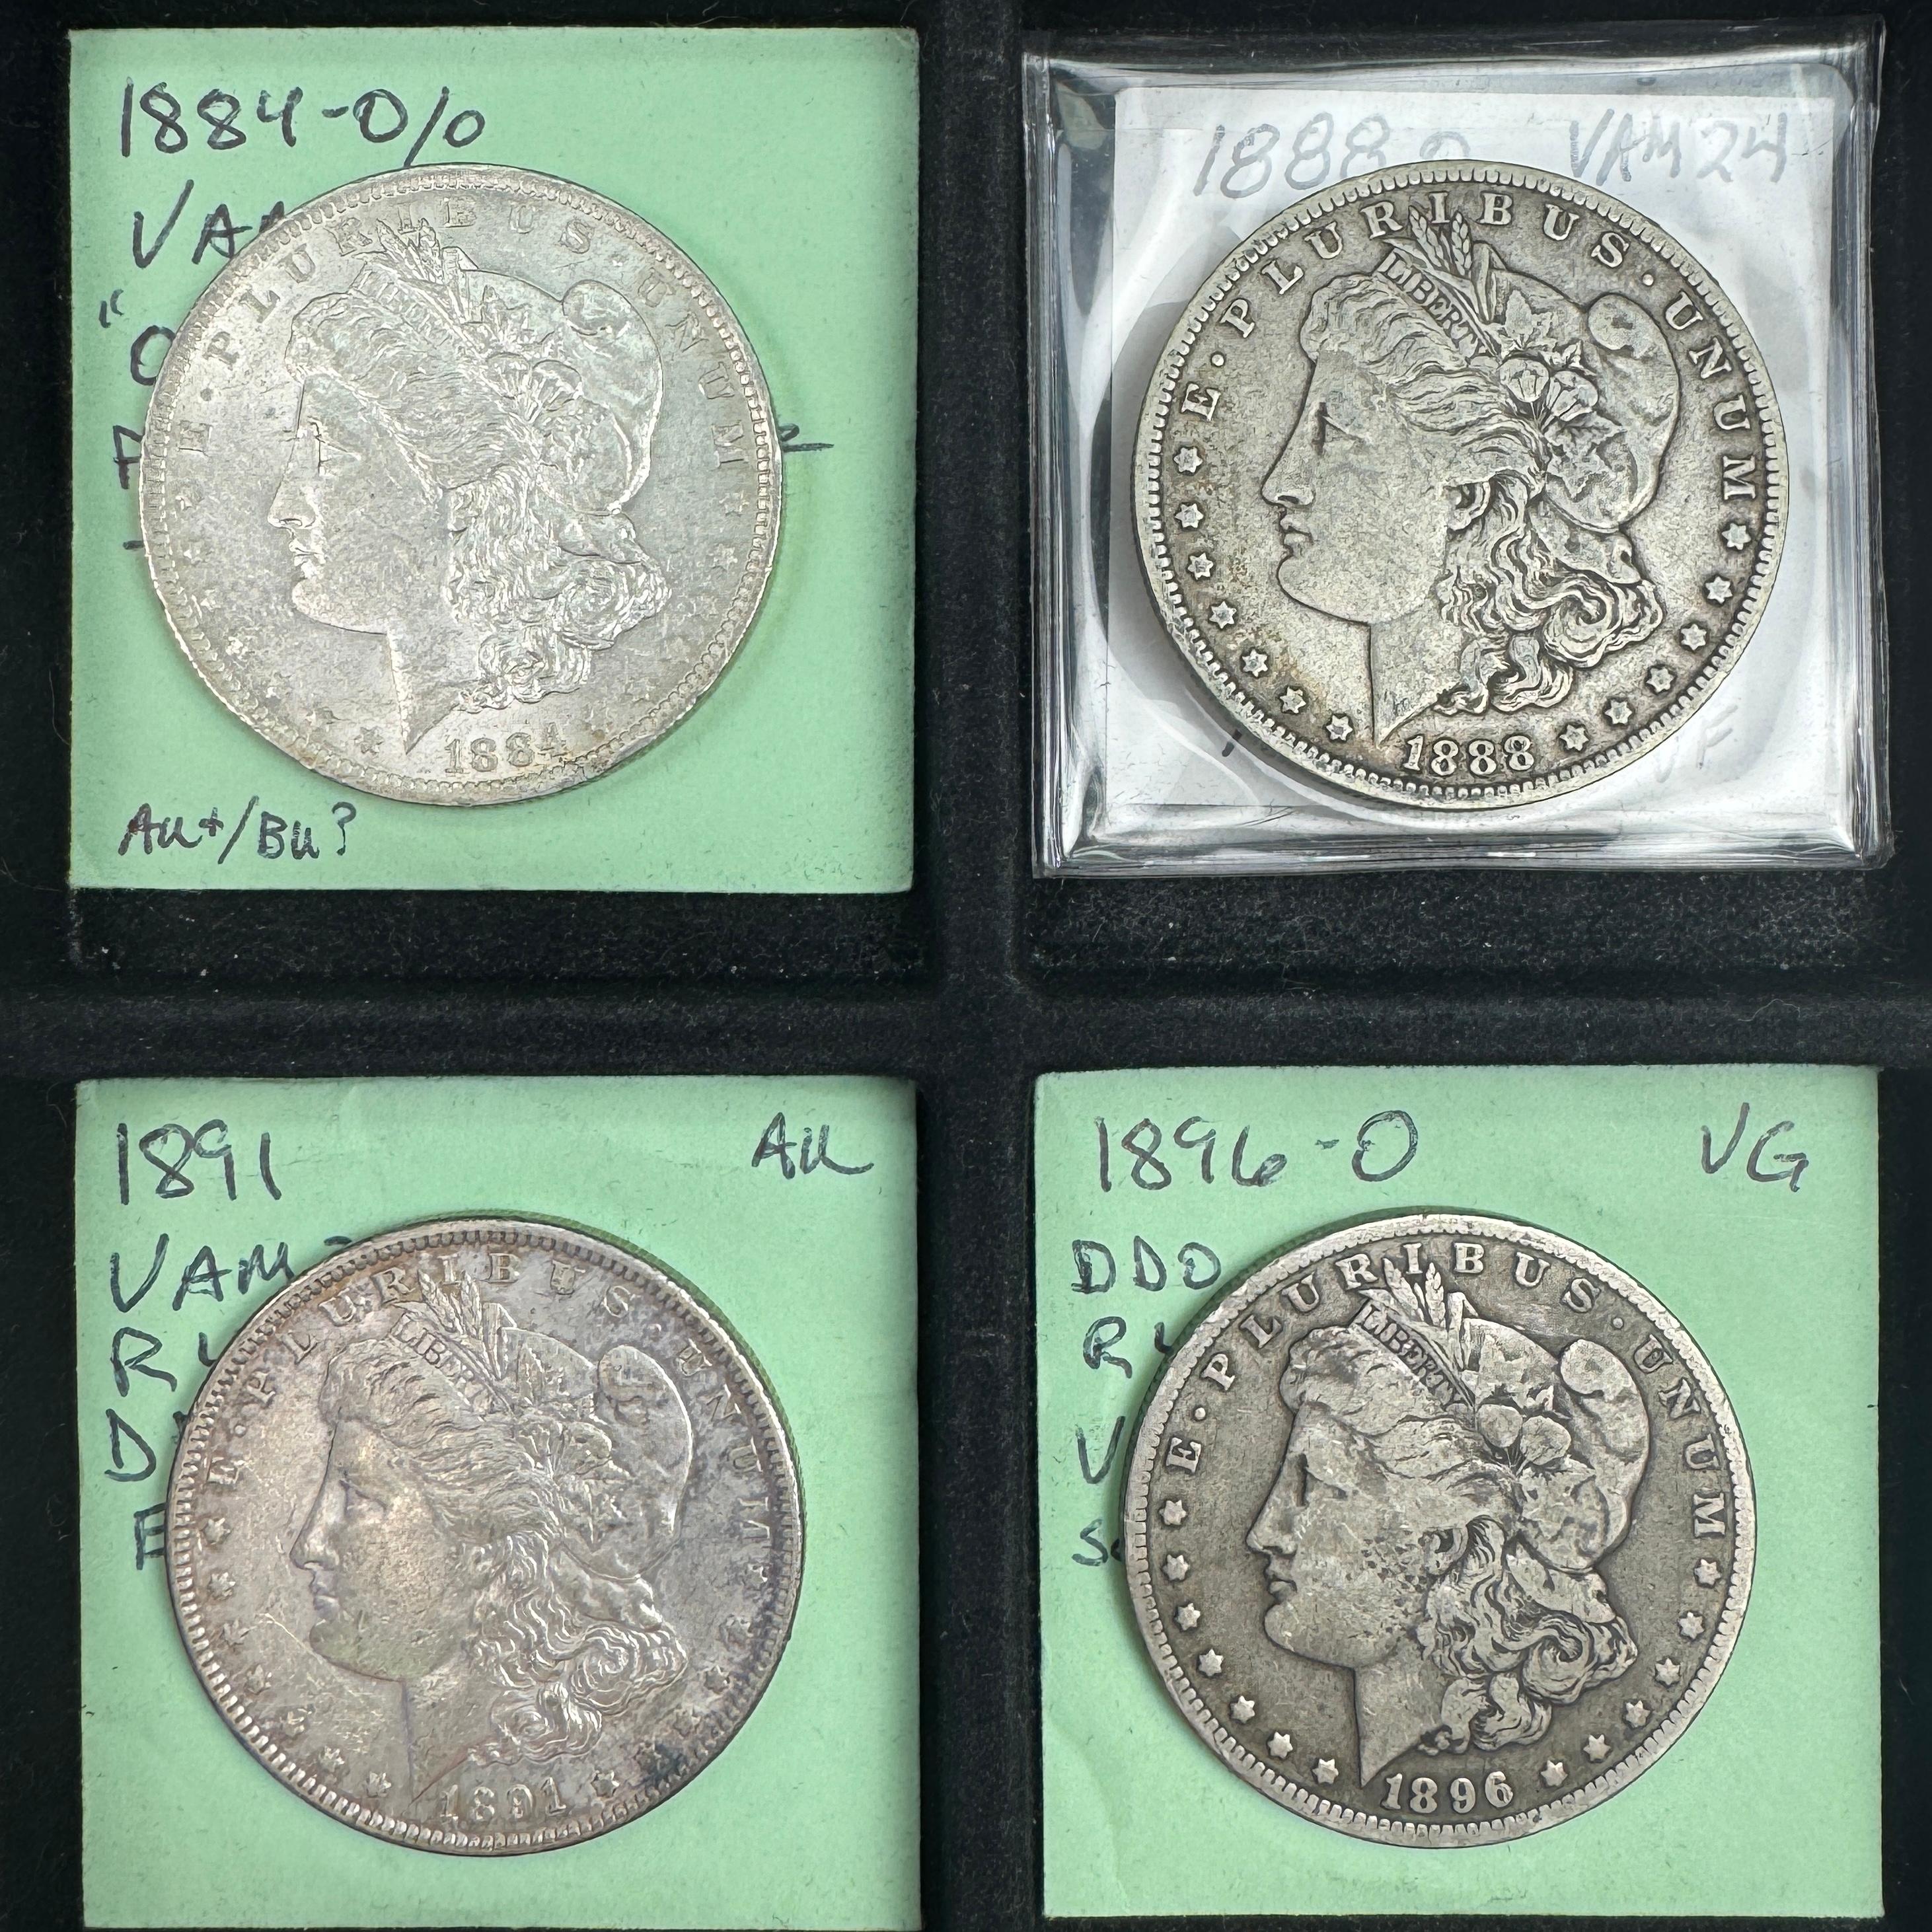 Lot of 15 VAM U.S. Morgan silver dollars